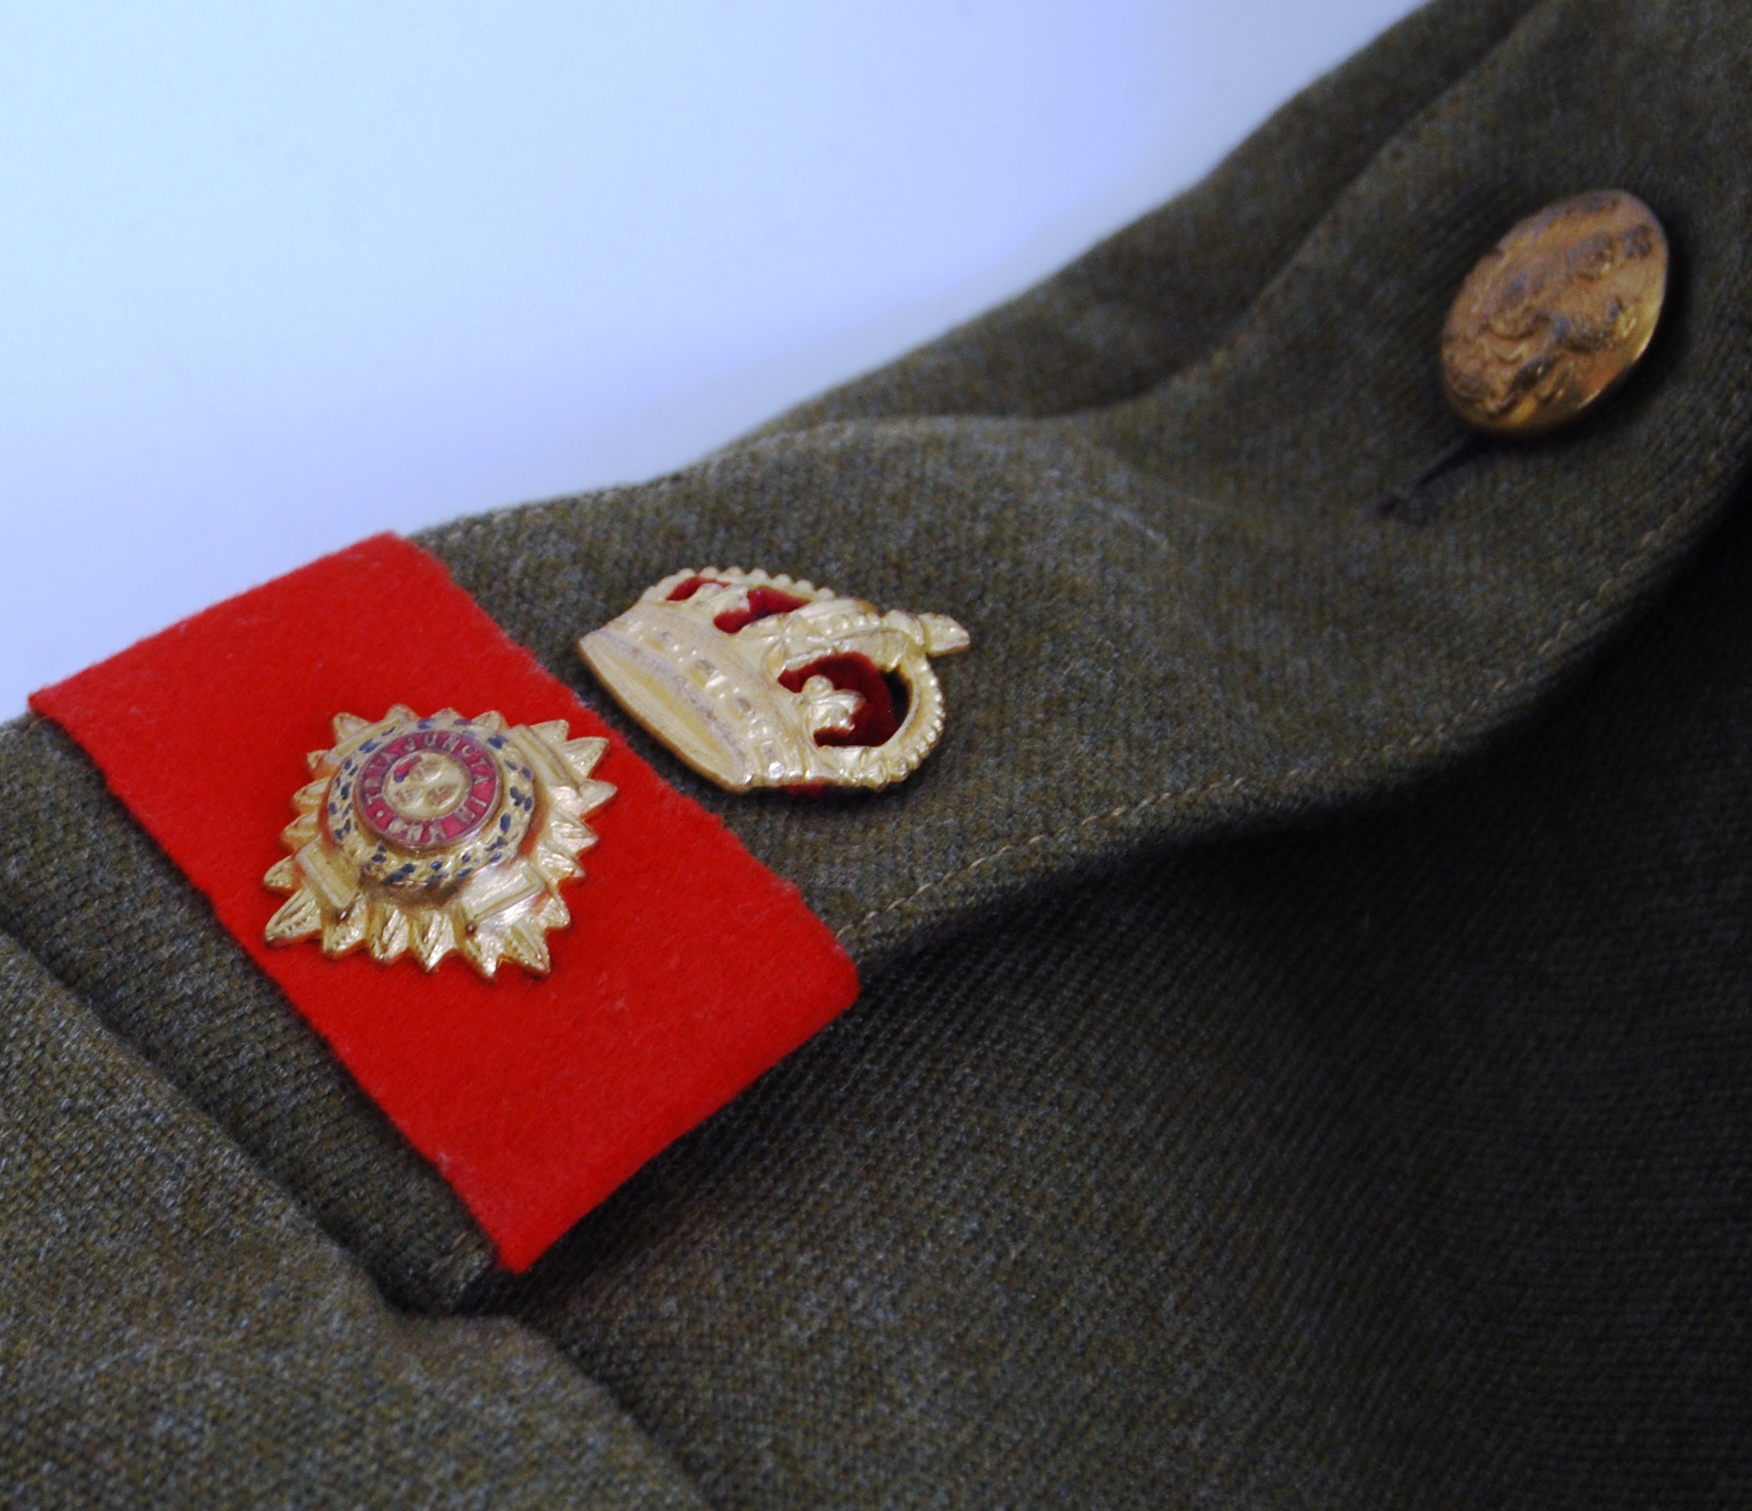 UNIFORM: An original vintage uniform belonging to an Officer Ethelstone - original jacket, belt, - Image 3 of 5